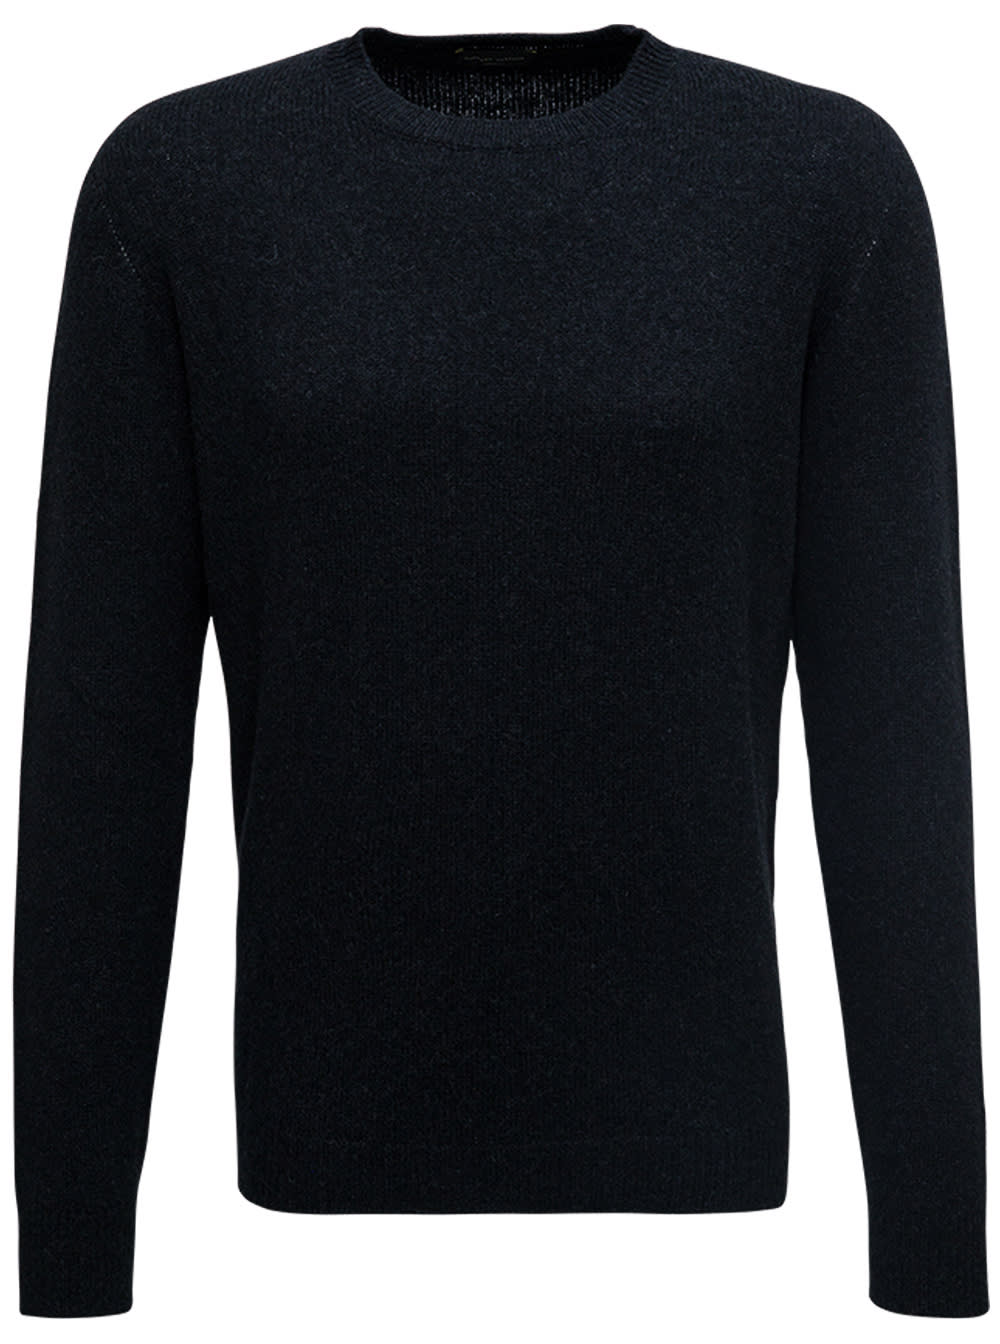 Roberto Collina Black Crew Neck Wool Blend Sweater